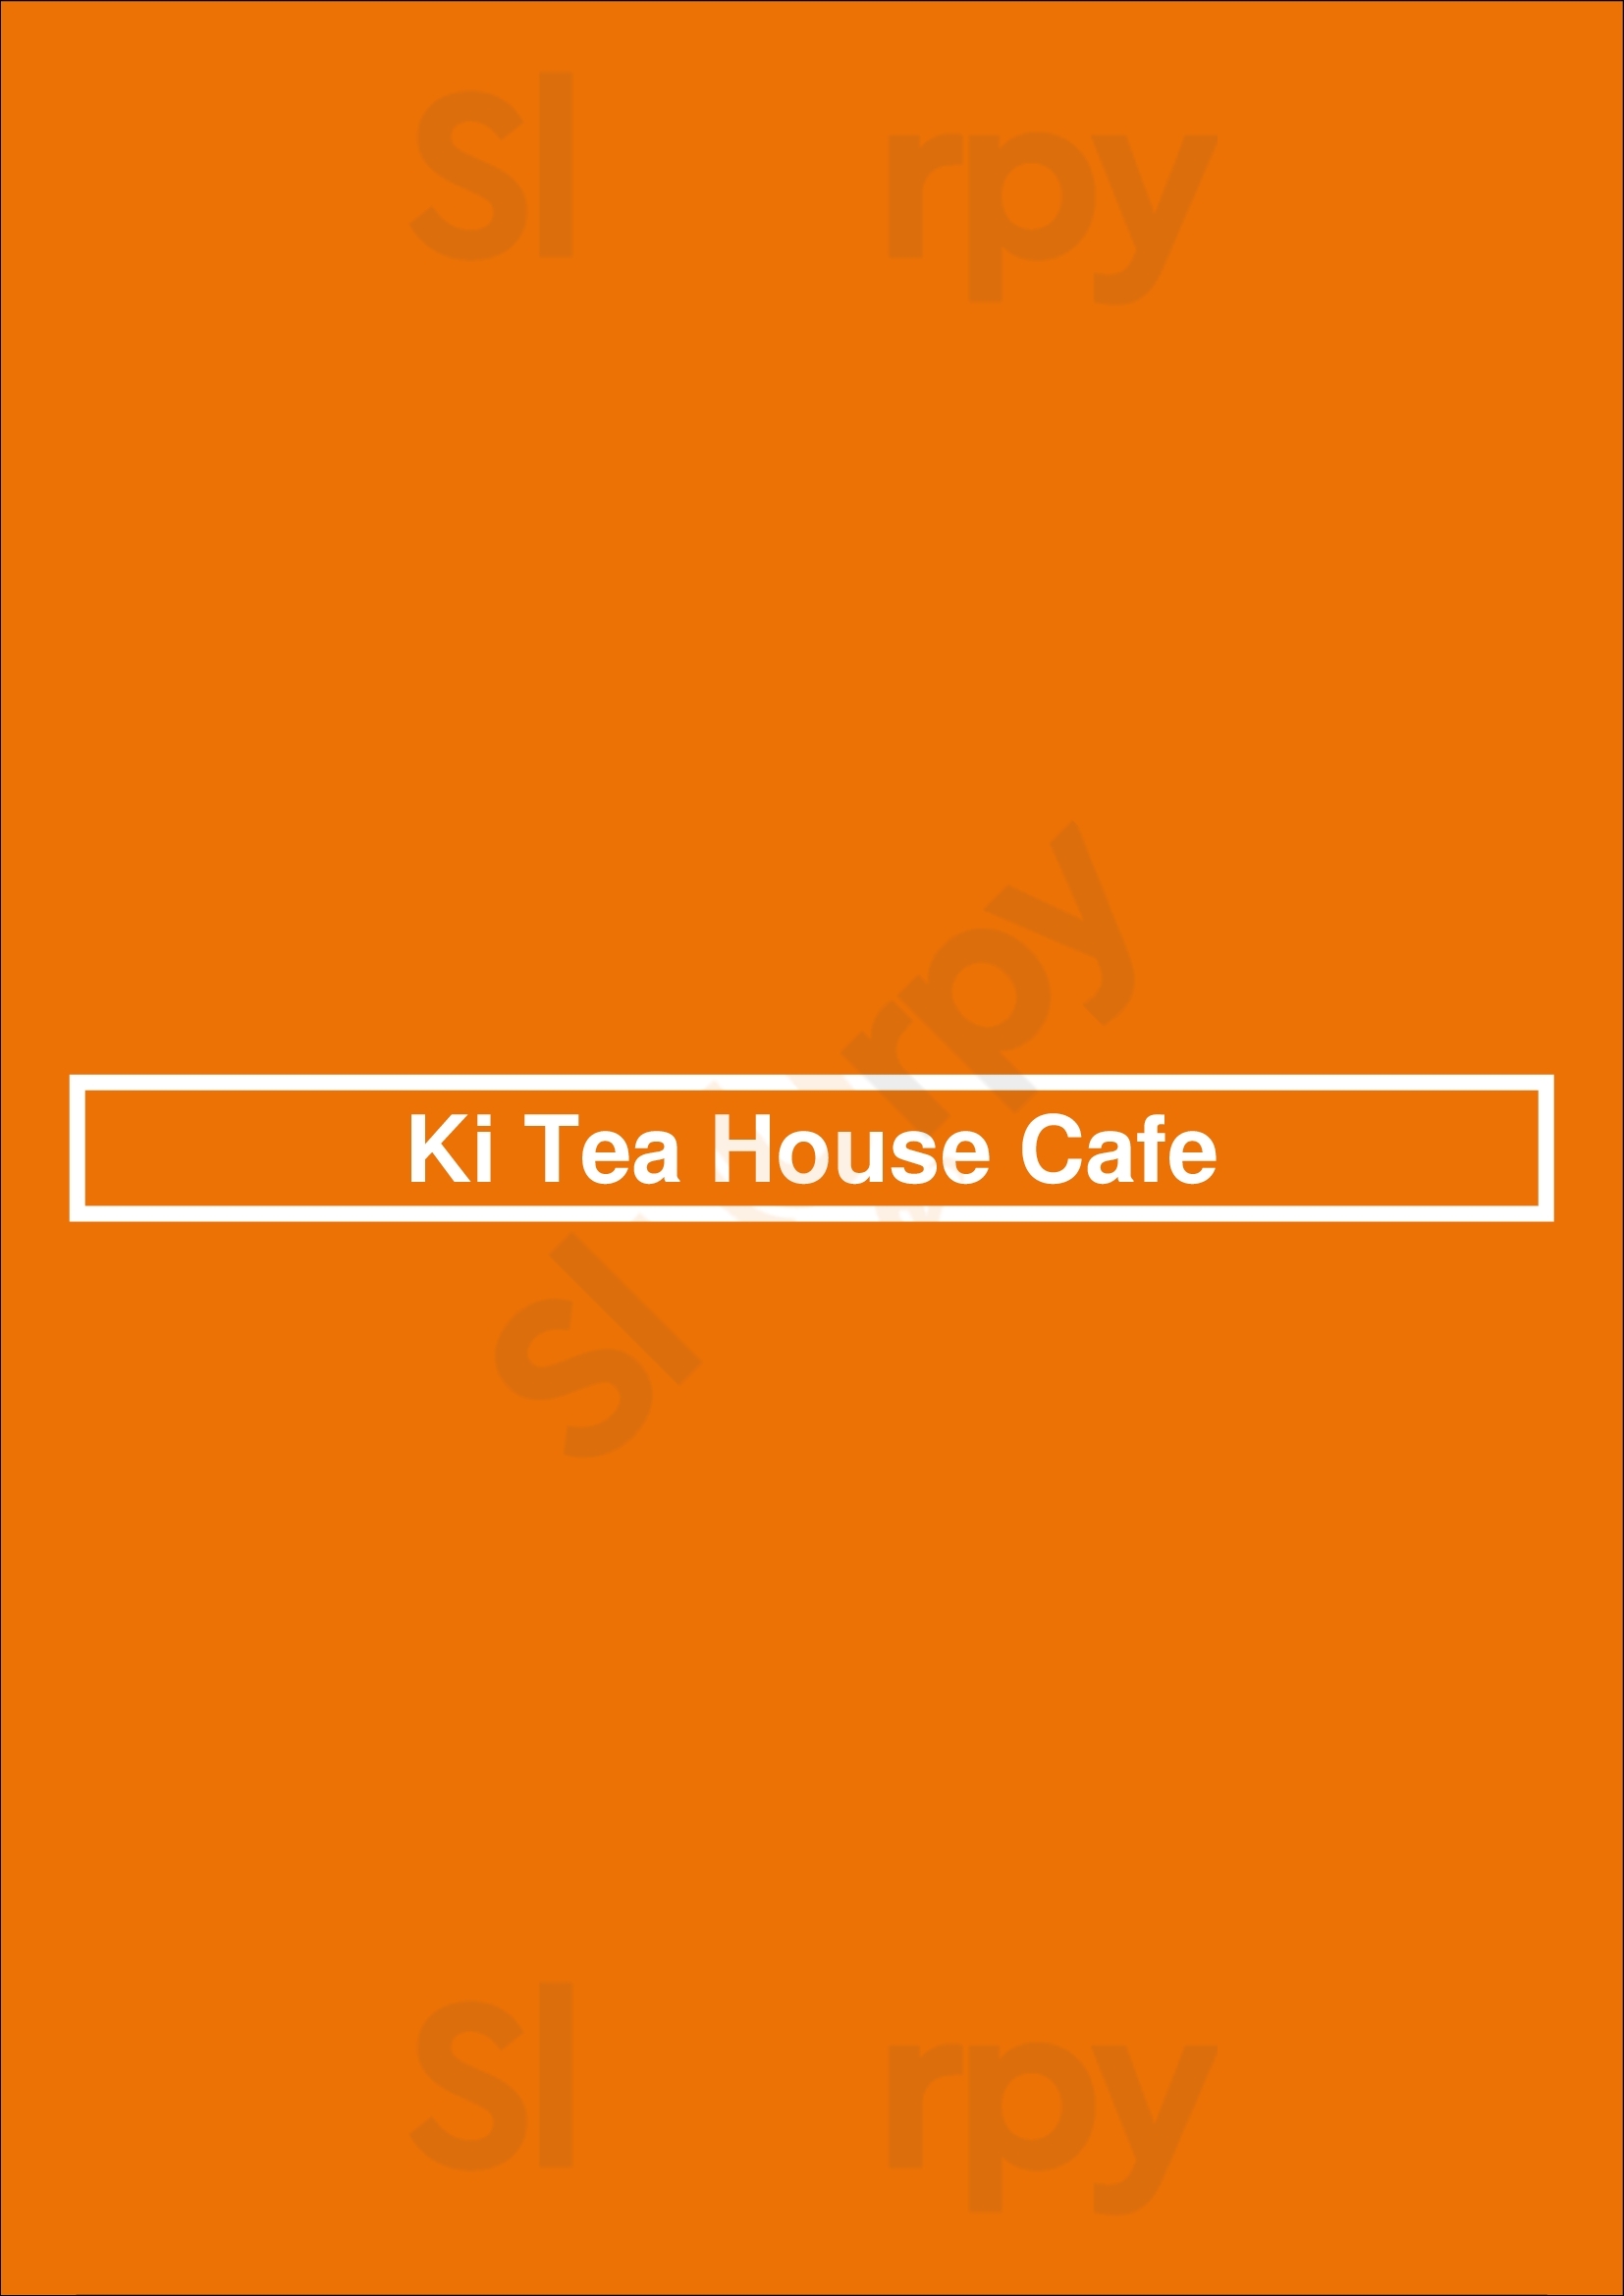 Ki Tea House Cafe Burnaby Menu - 1